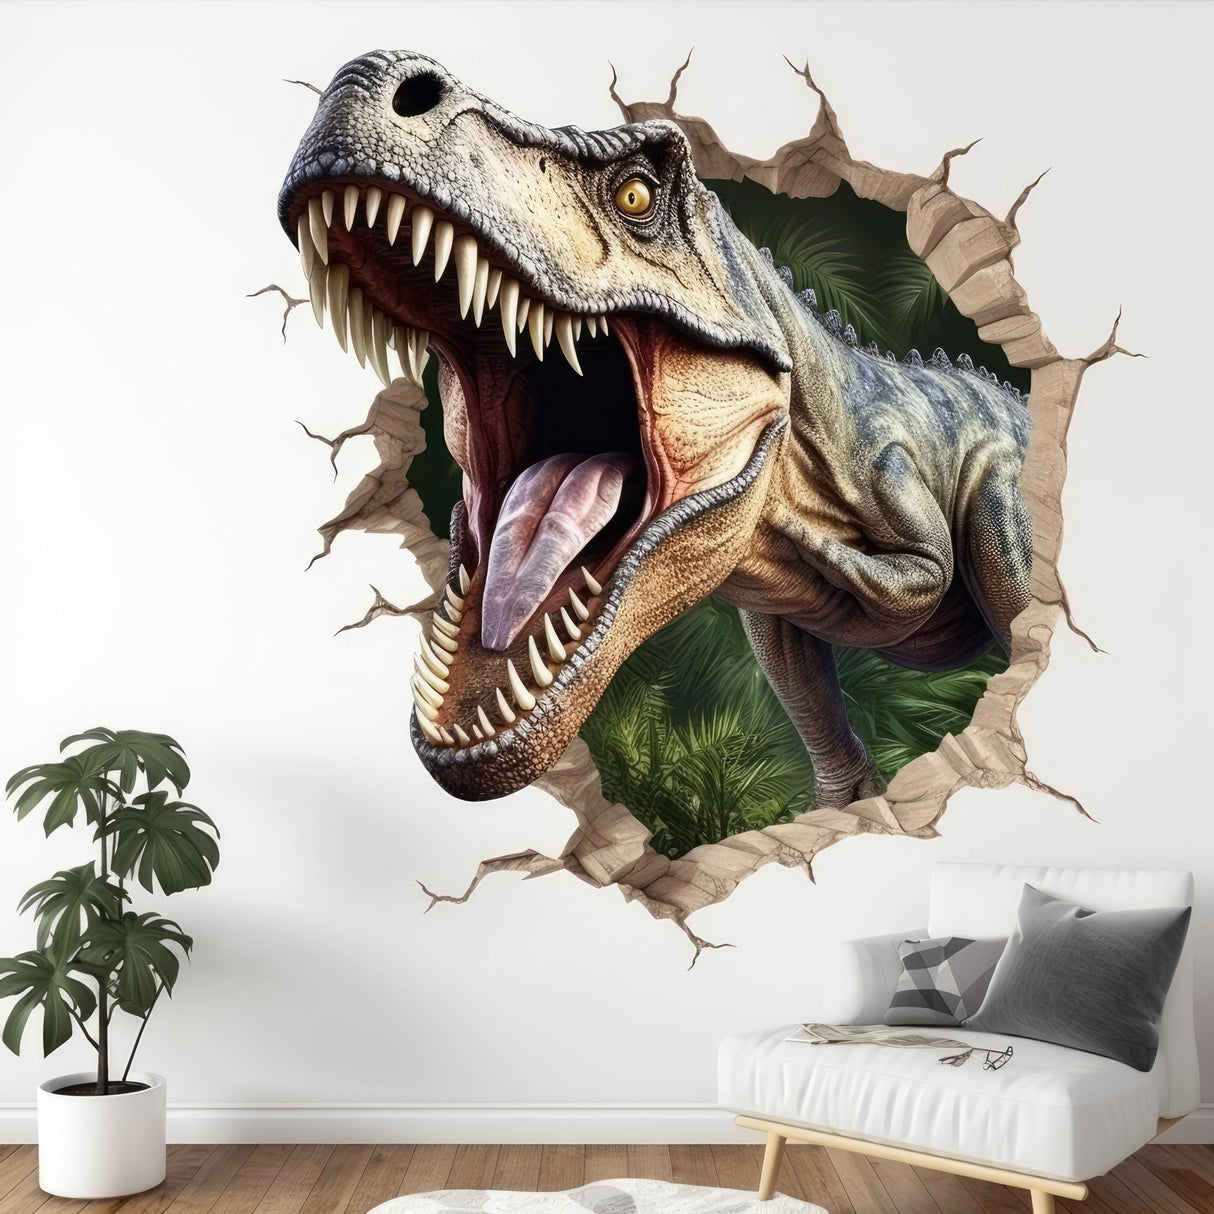 3D Dinosaurs Art Wall Sticker - Vinyl Decal Decor with Dynamic Broken Illusion Effect